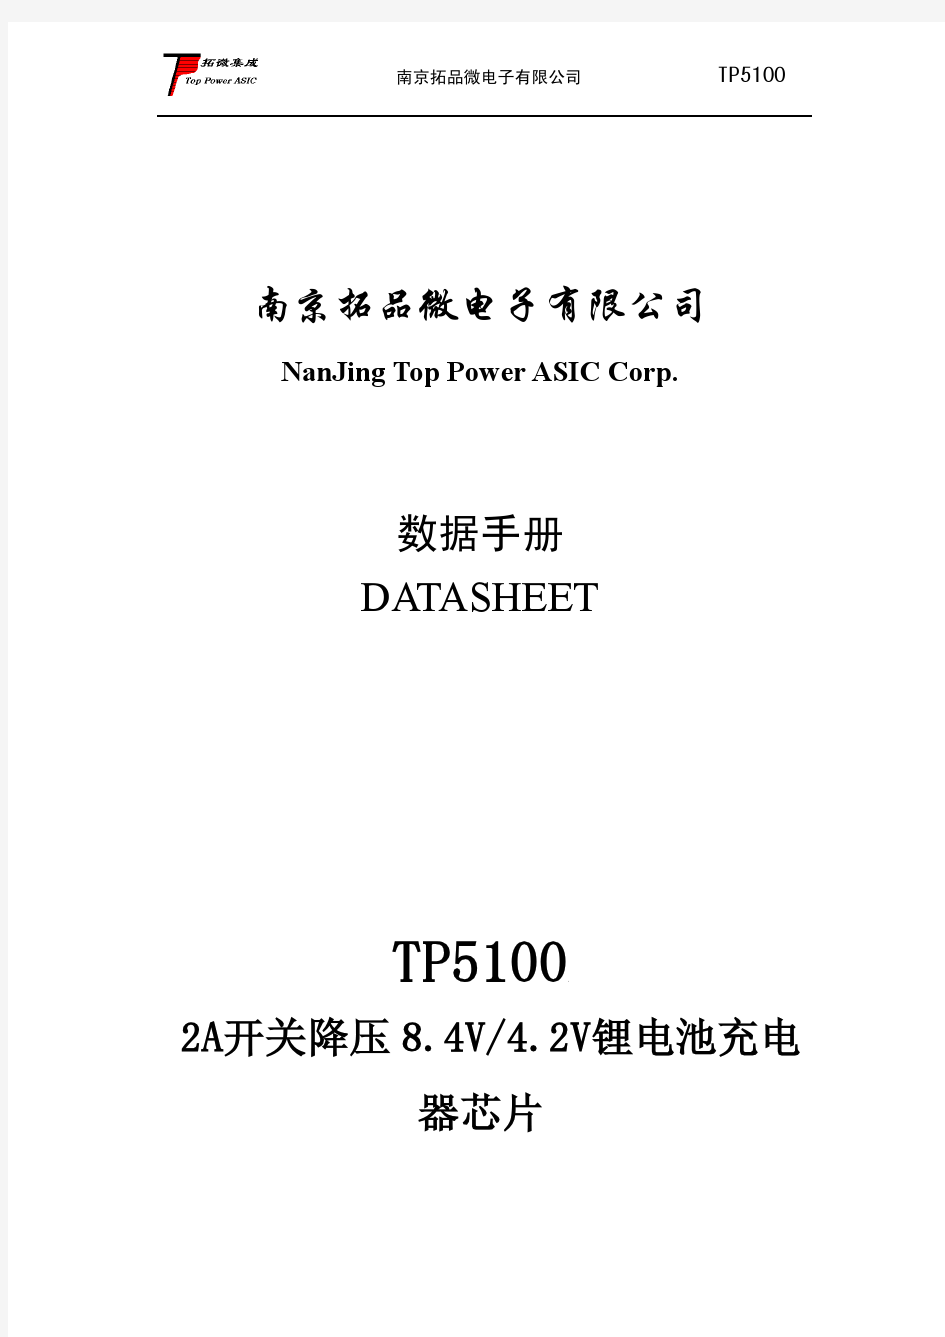 TP5100中文datasheet